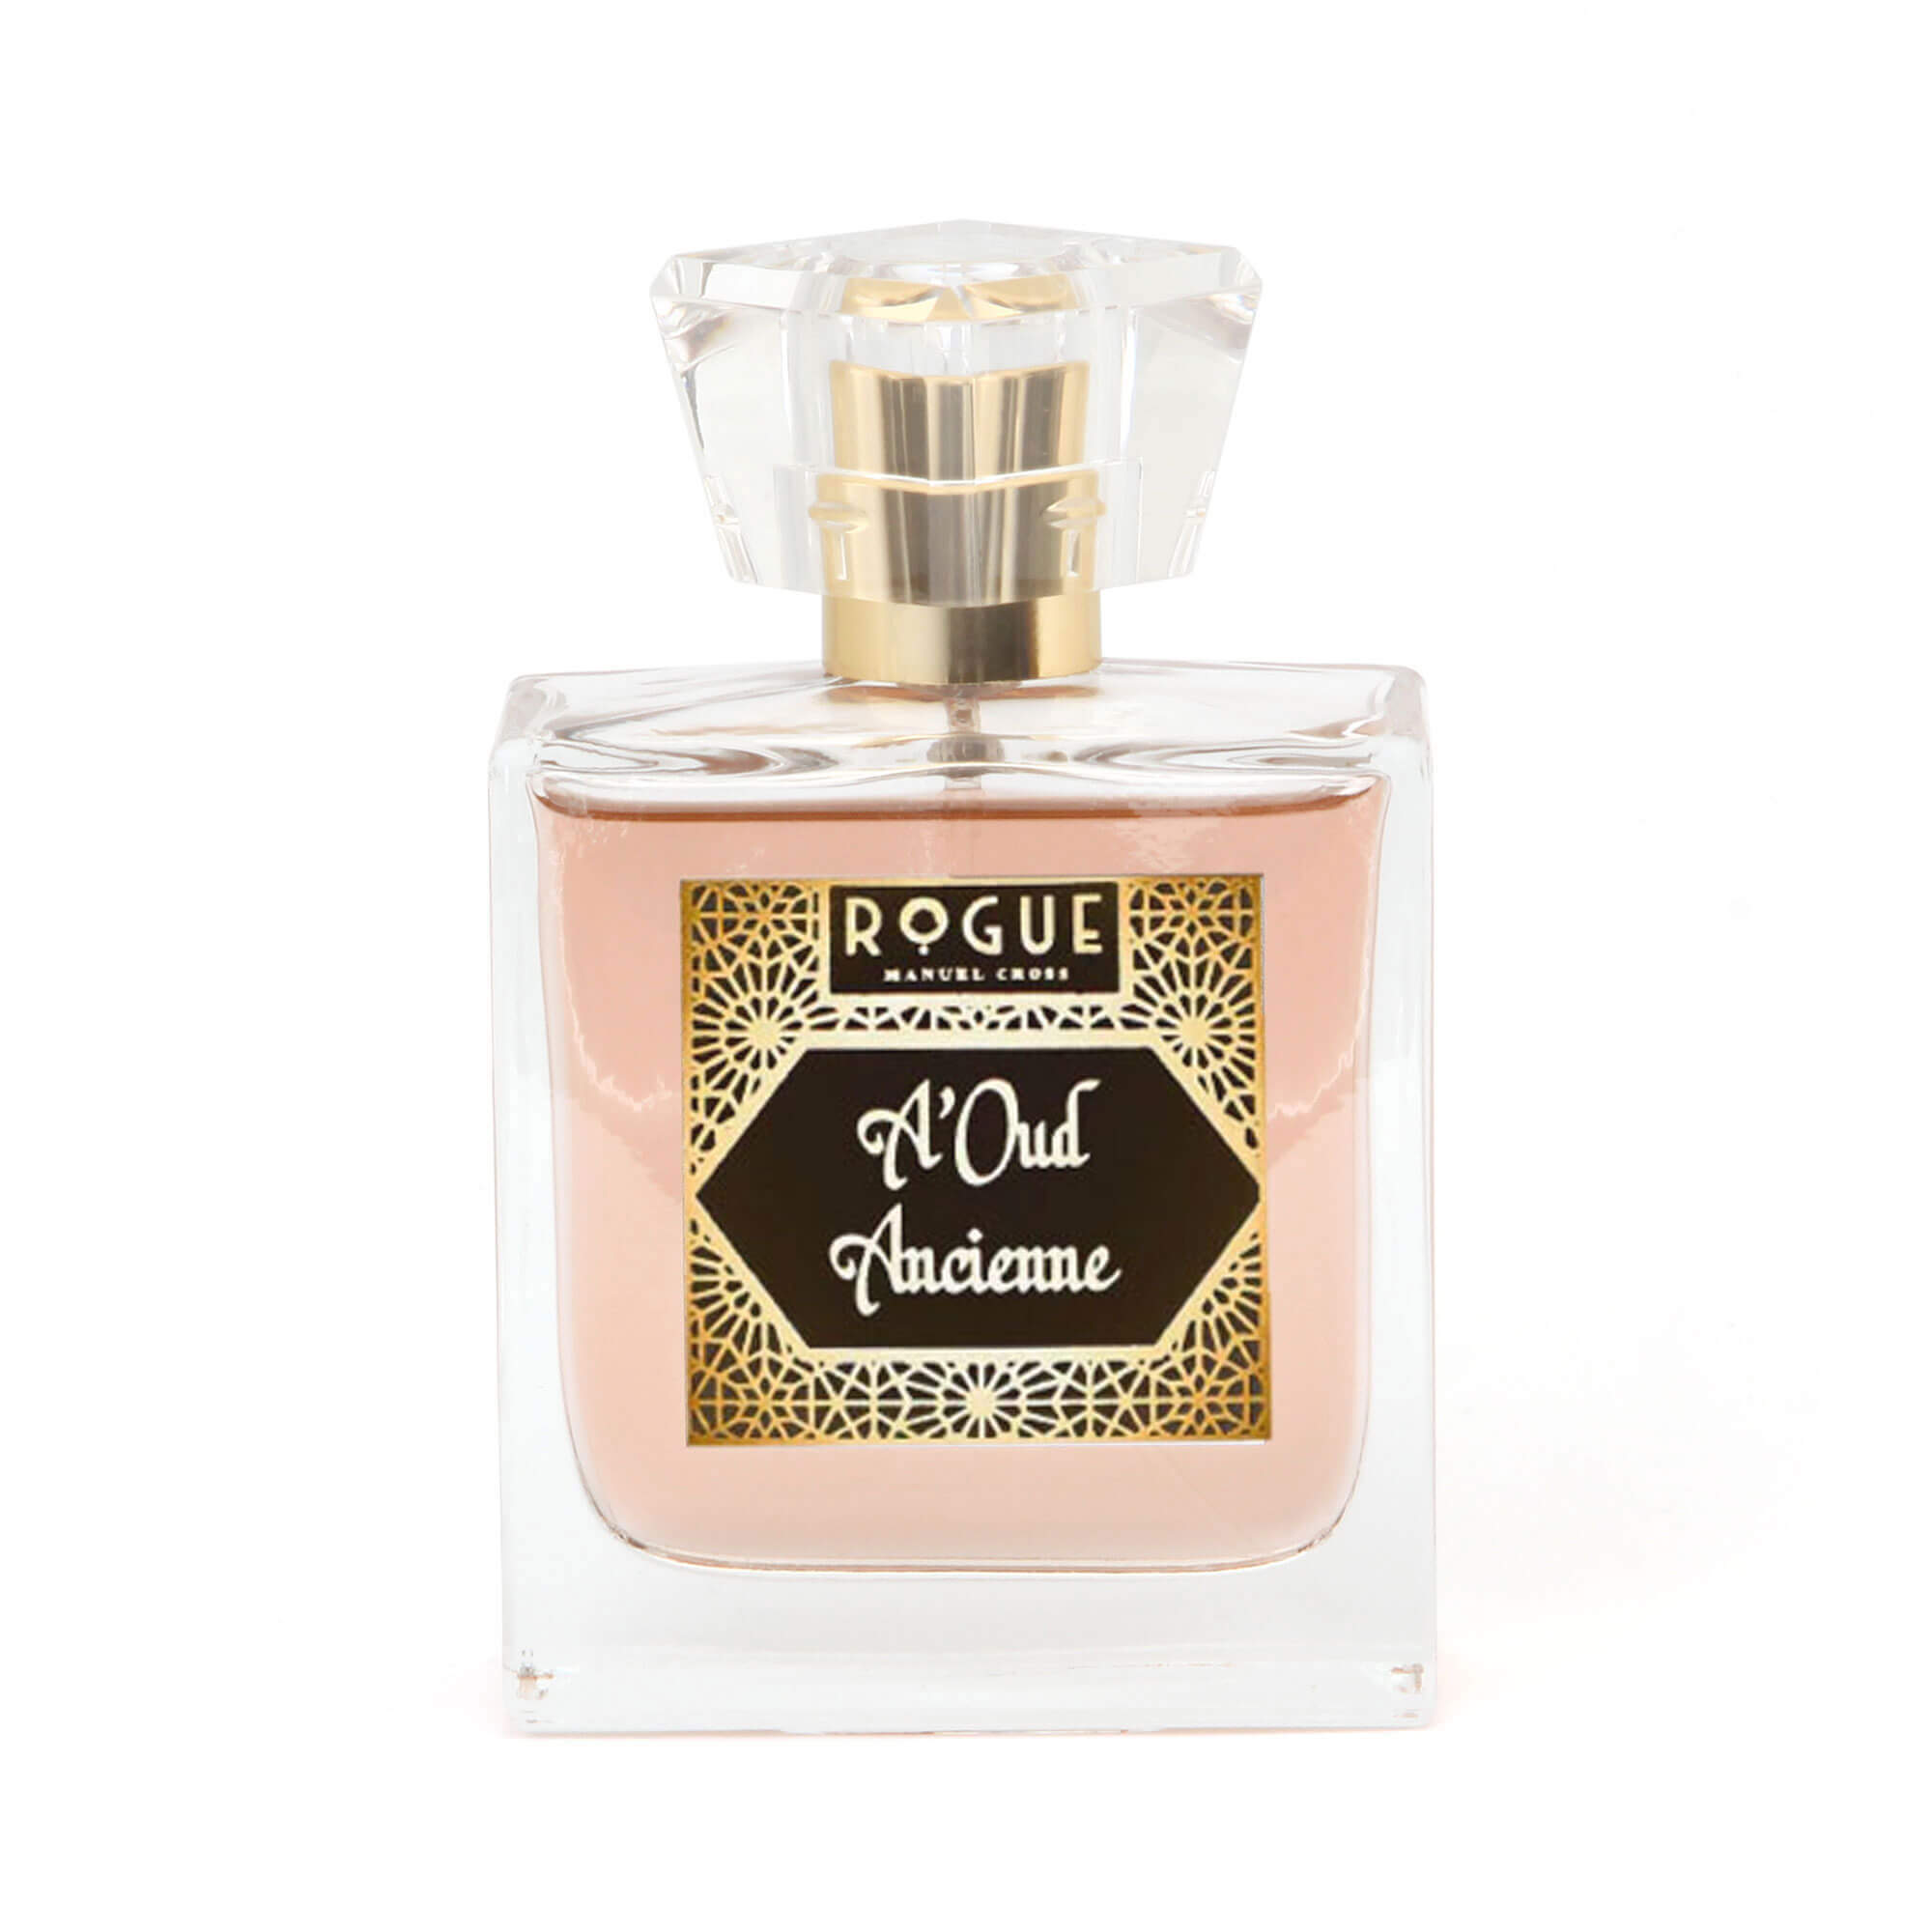 Rogue Perfumery A'Oud Ancienne Eau De Toilette